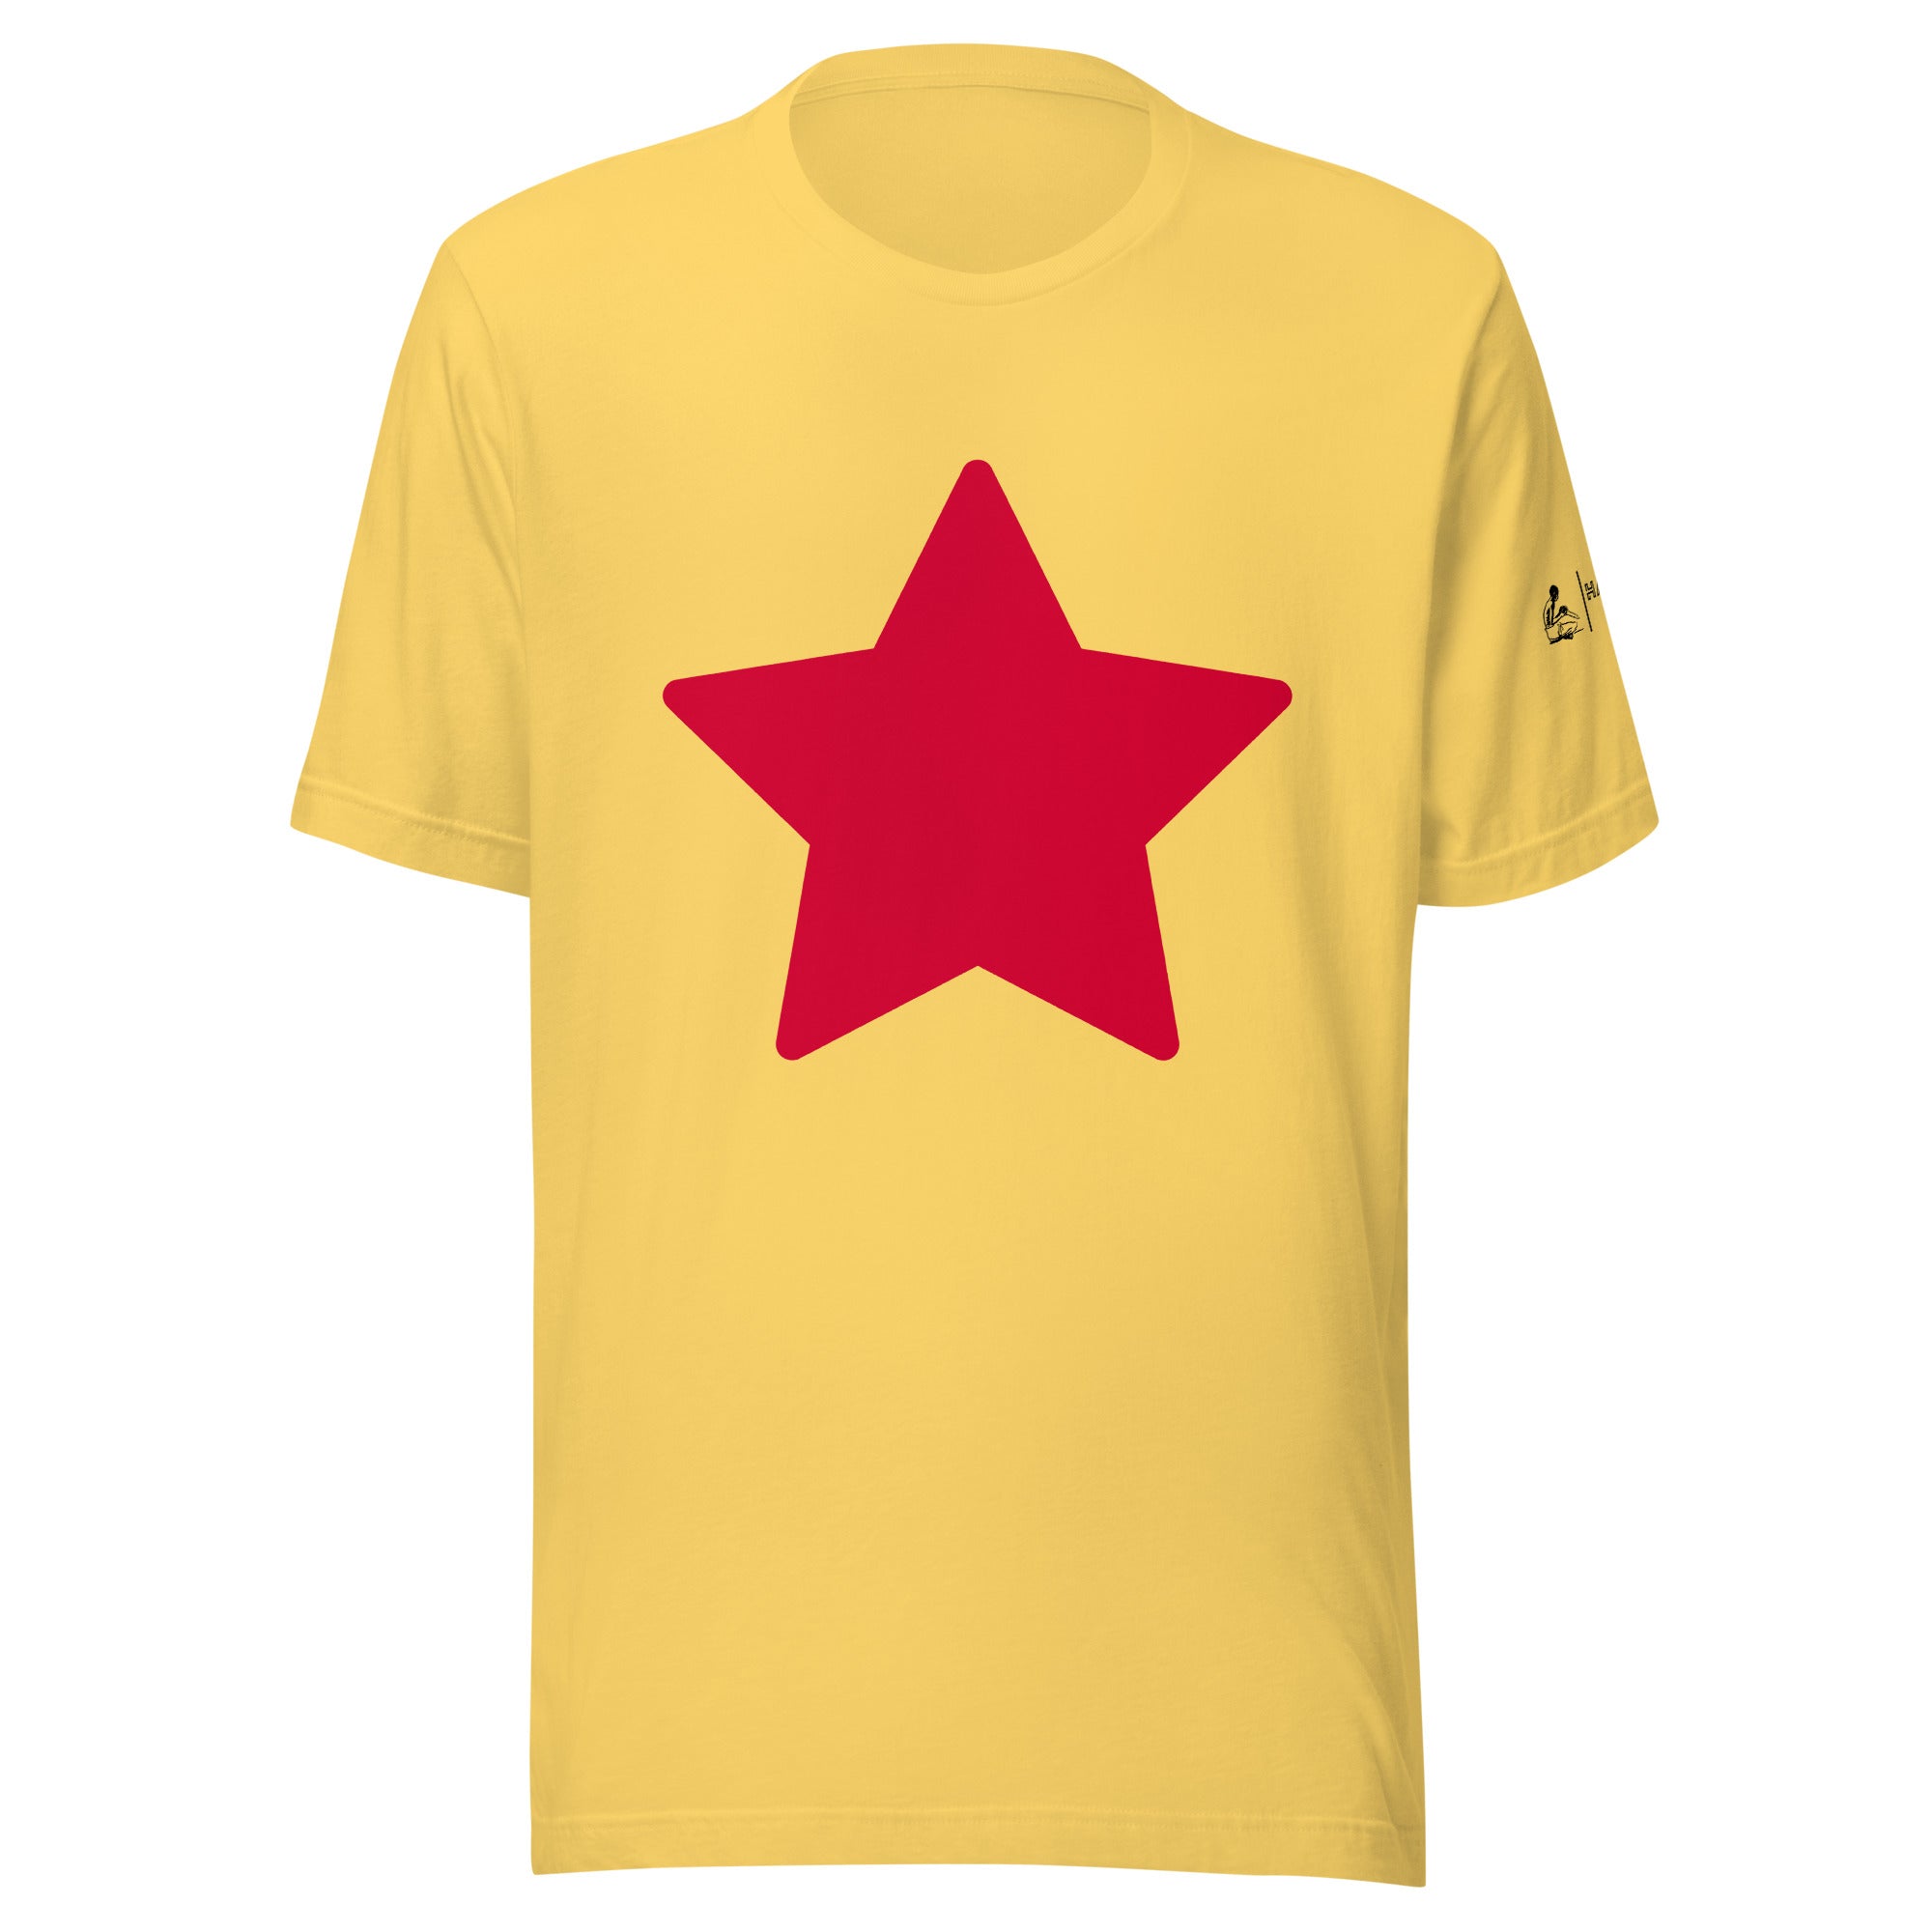 Jamaican - Unisex t-shirt